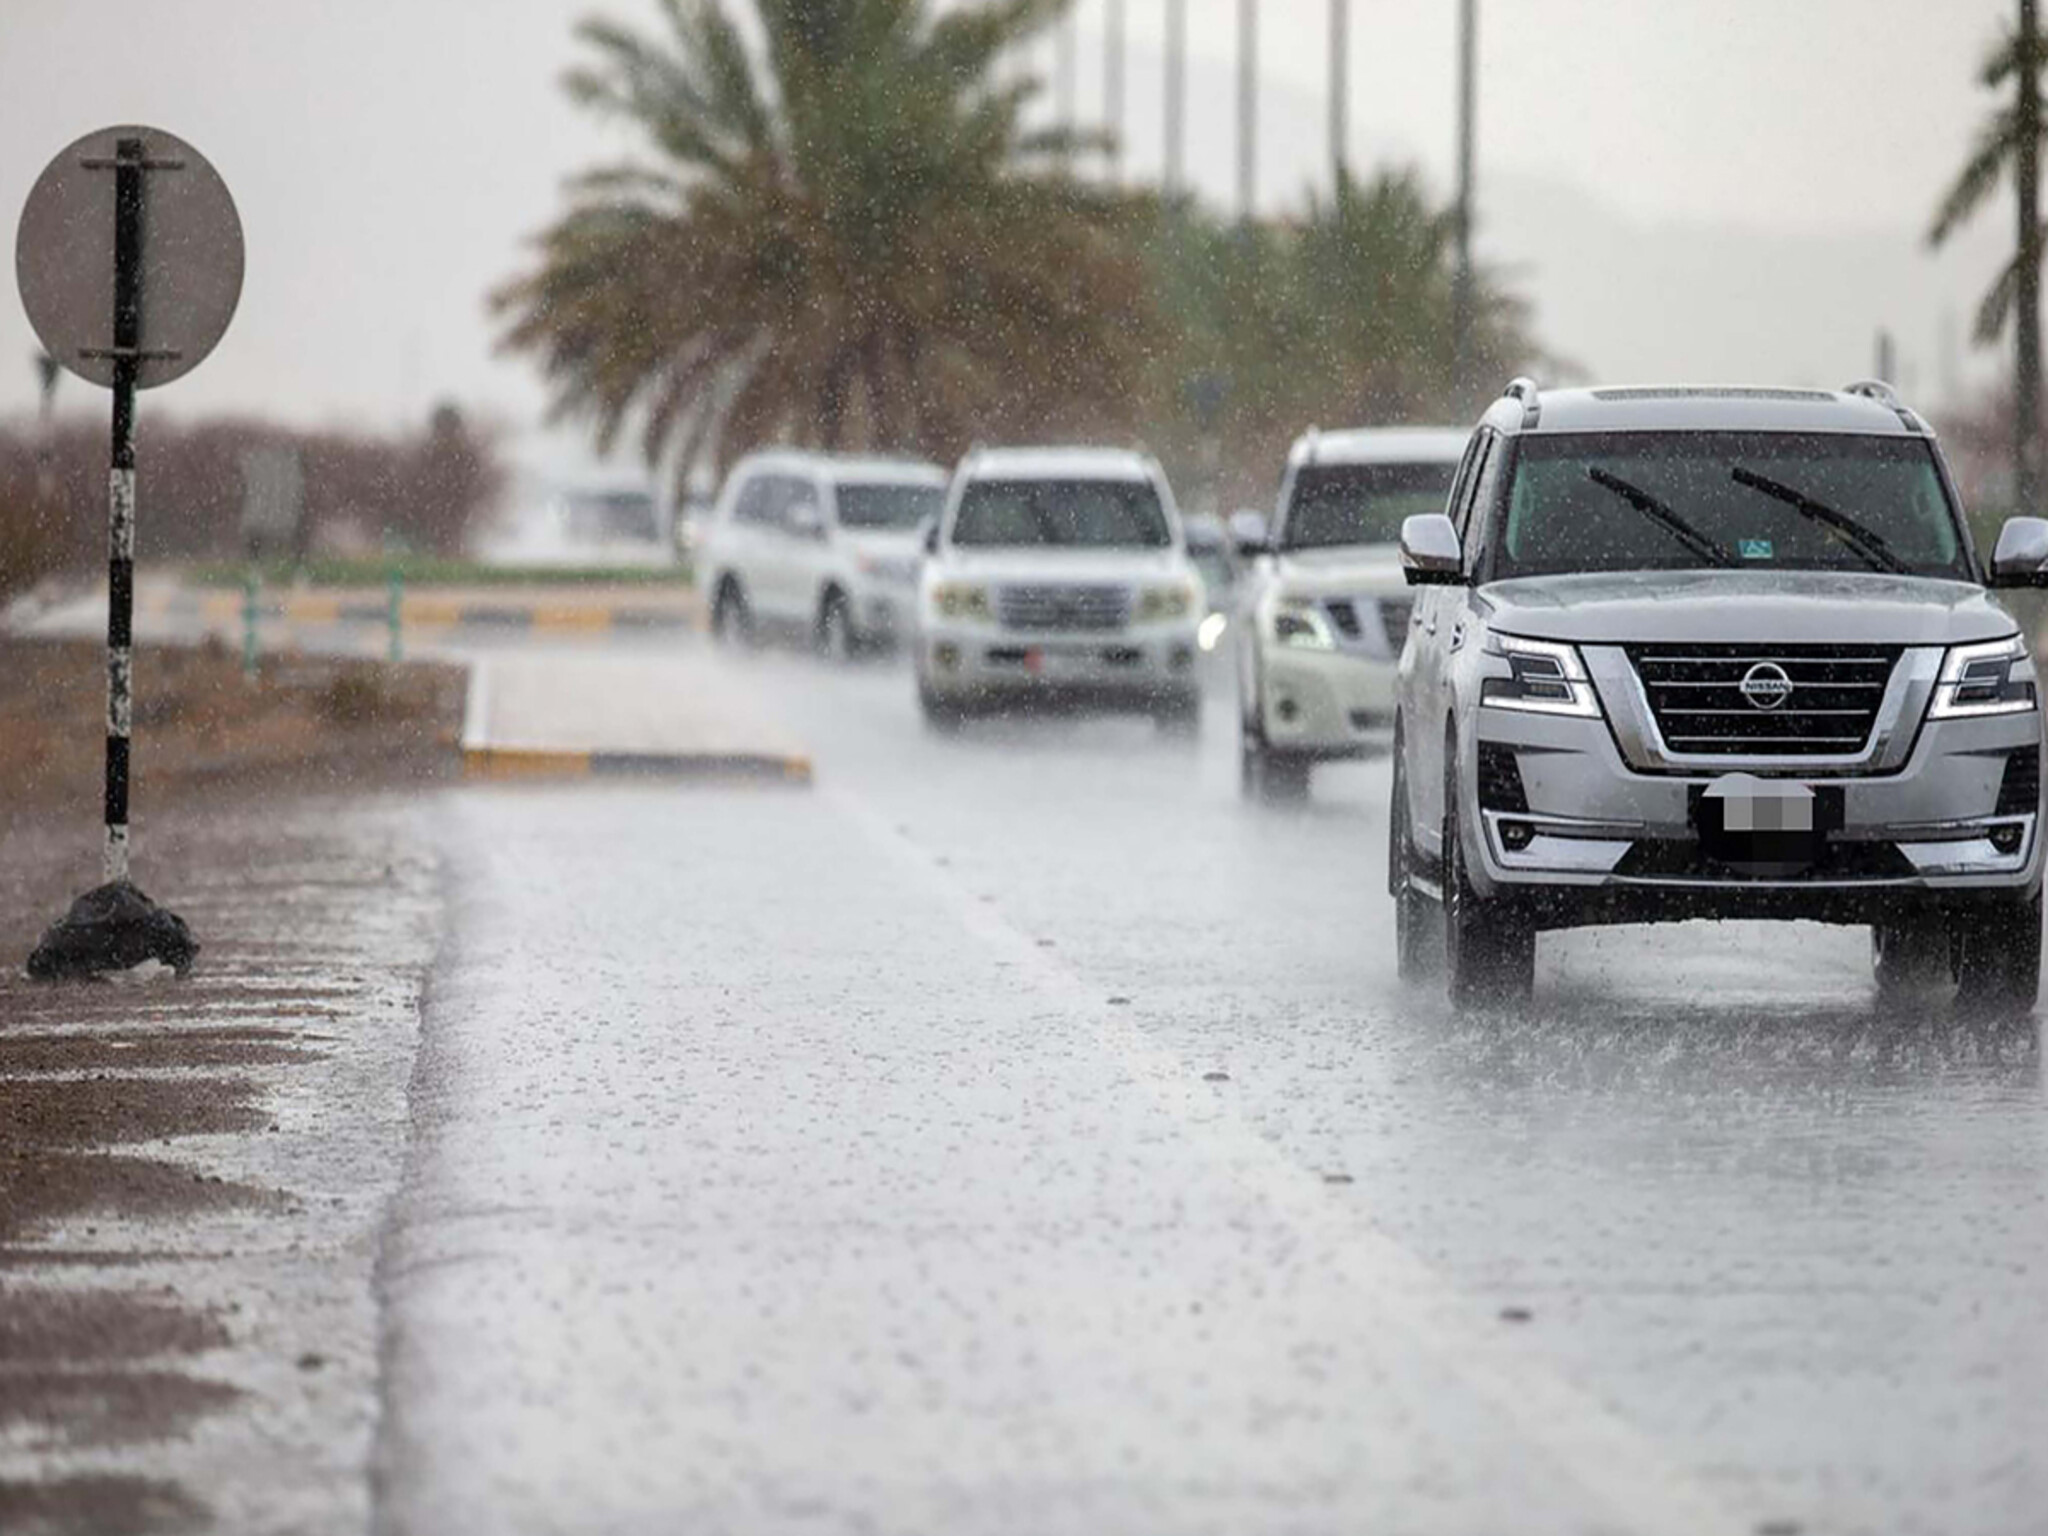 Heavy rain in Abu Dhabi and Dubai due to the storm